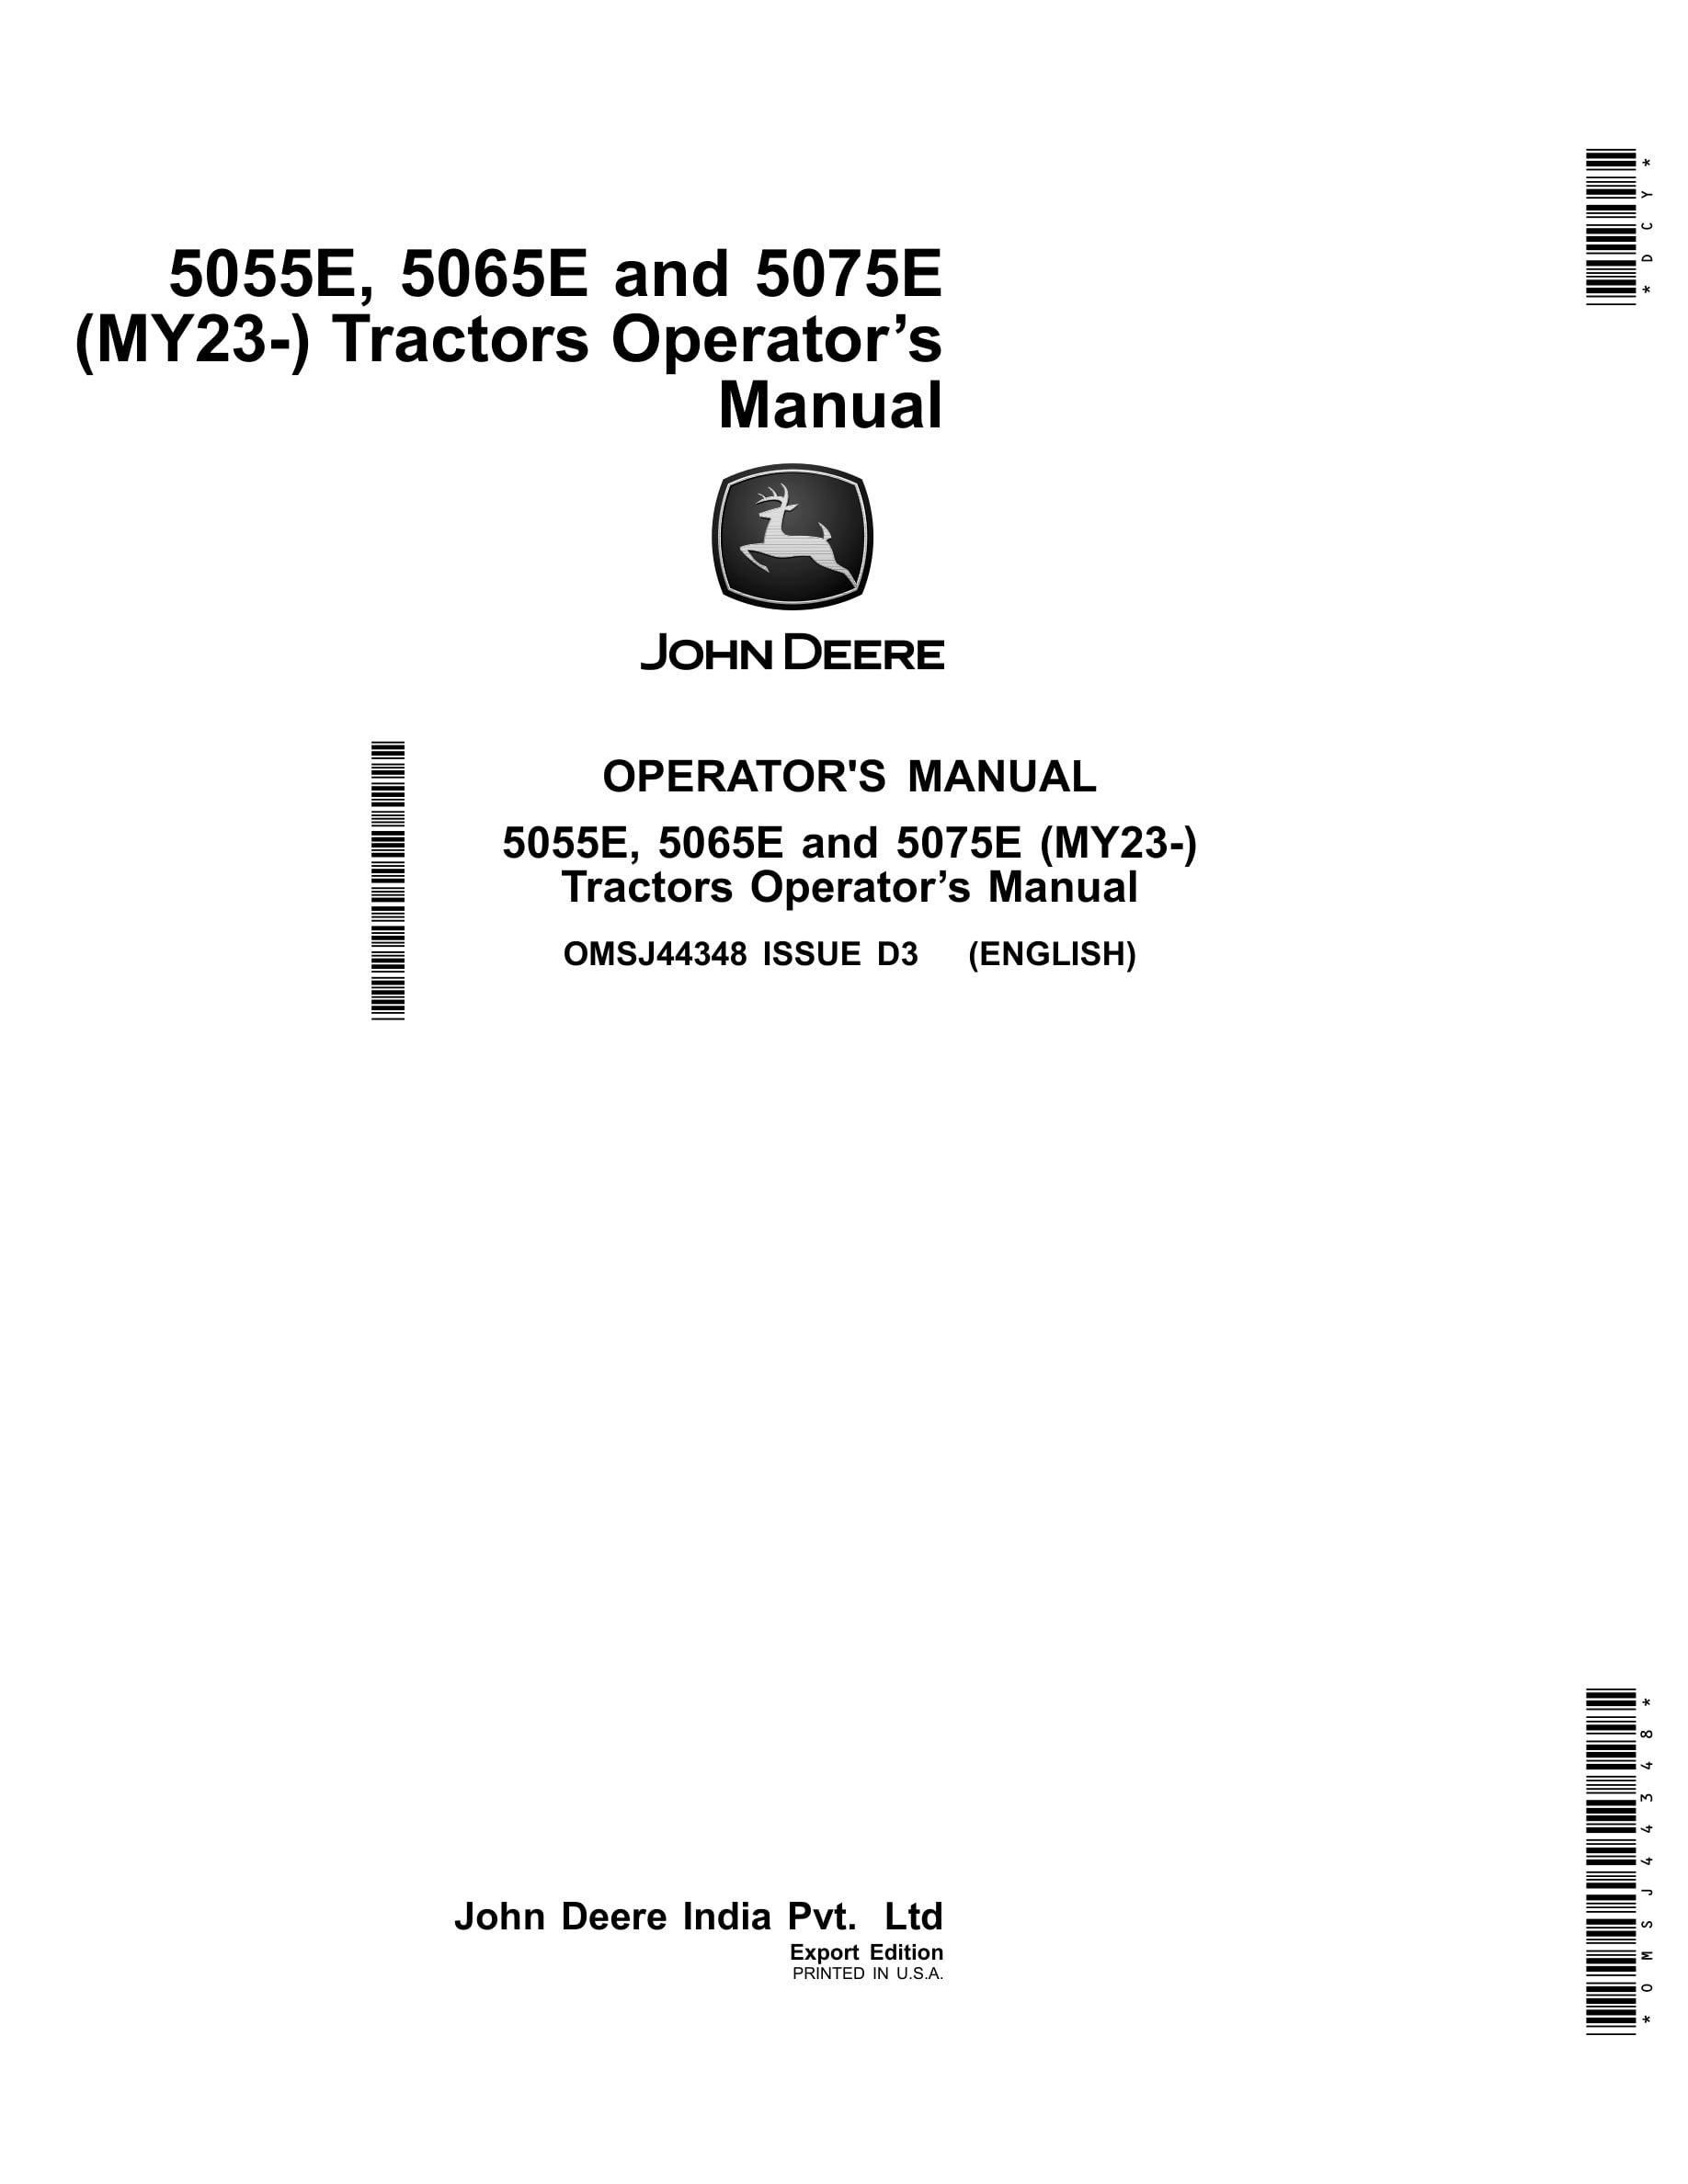 John Deere 5055e, 5065e And 5075e (my23-) Tractors Operator Manuals OMSJ44348-1